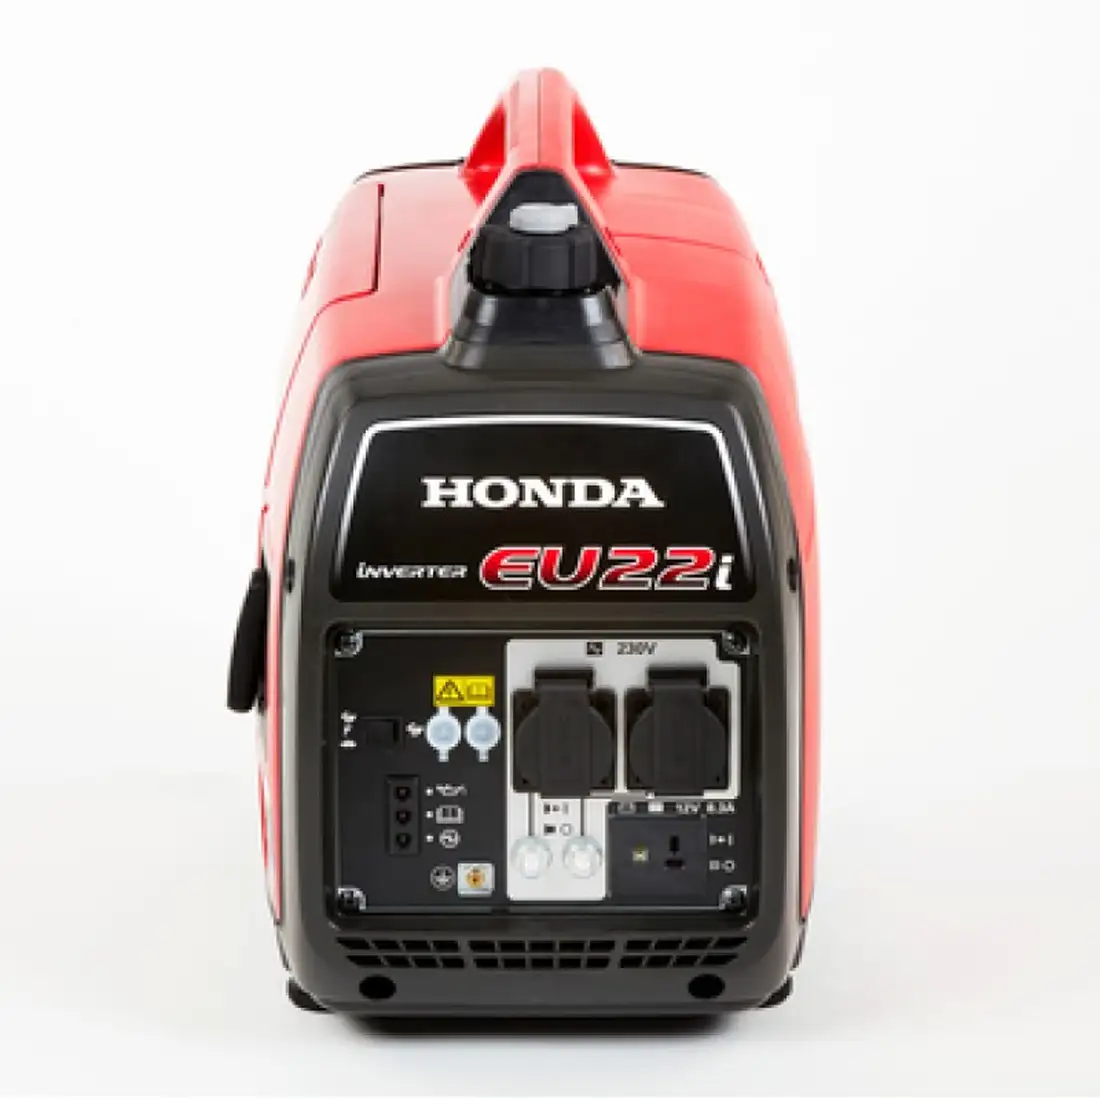 Honda EU22i Petrol Inverter Generator